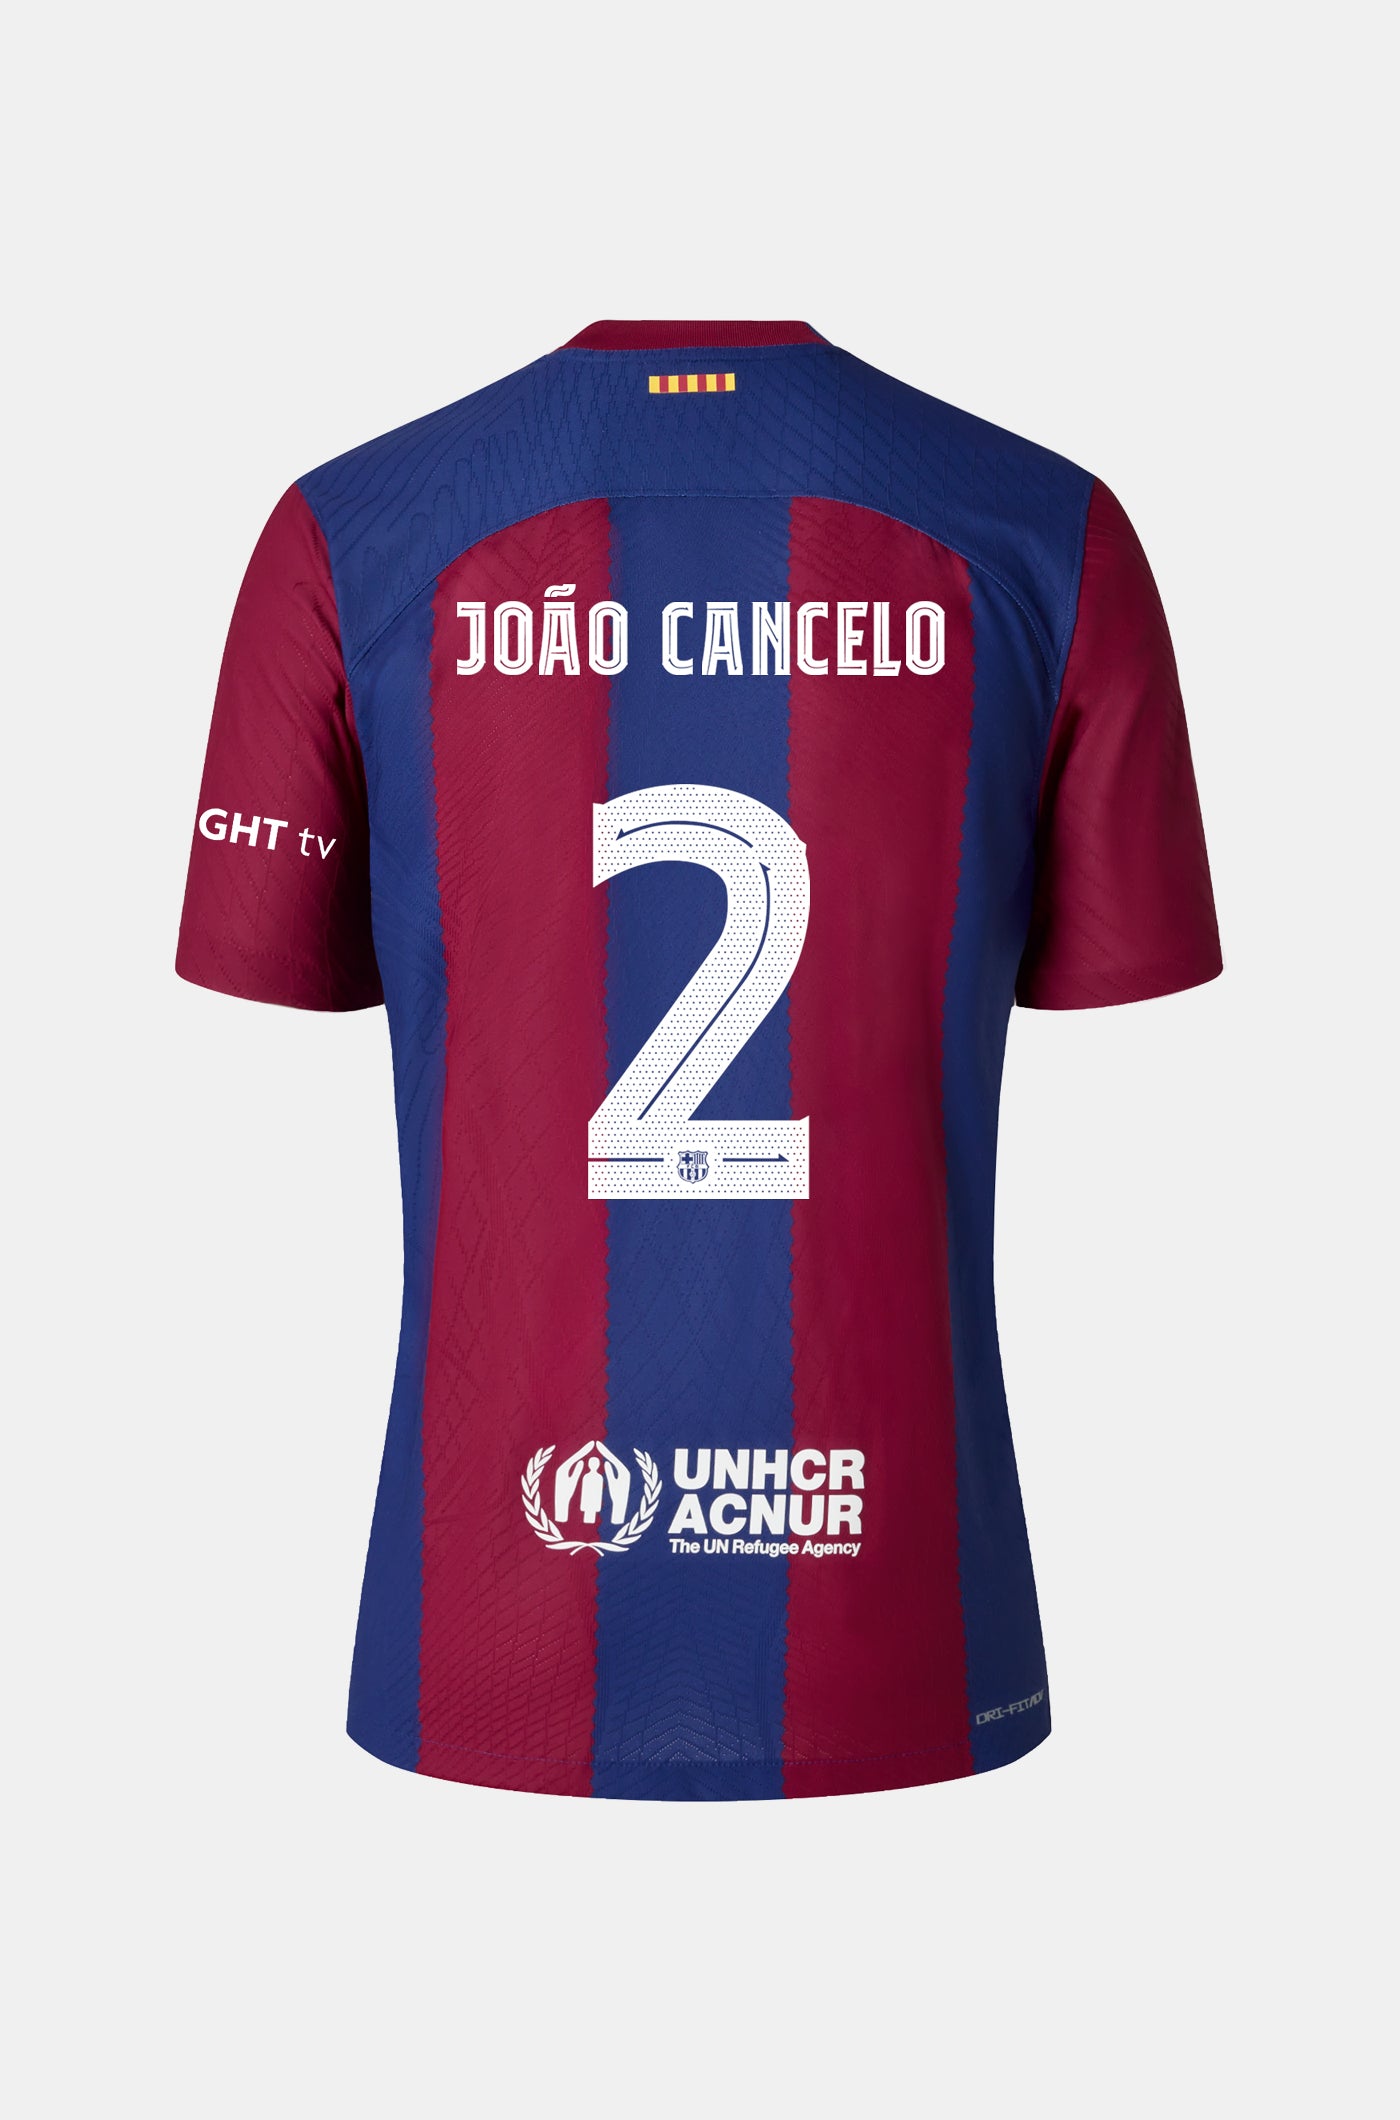 FC Barcelona home shirt 23/24 - Long-sleeve Player's Edition - JOÃO CANCELO